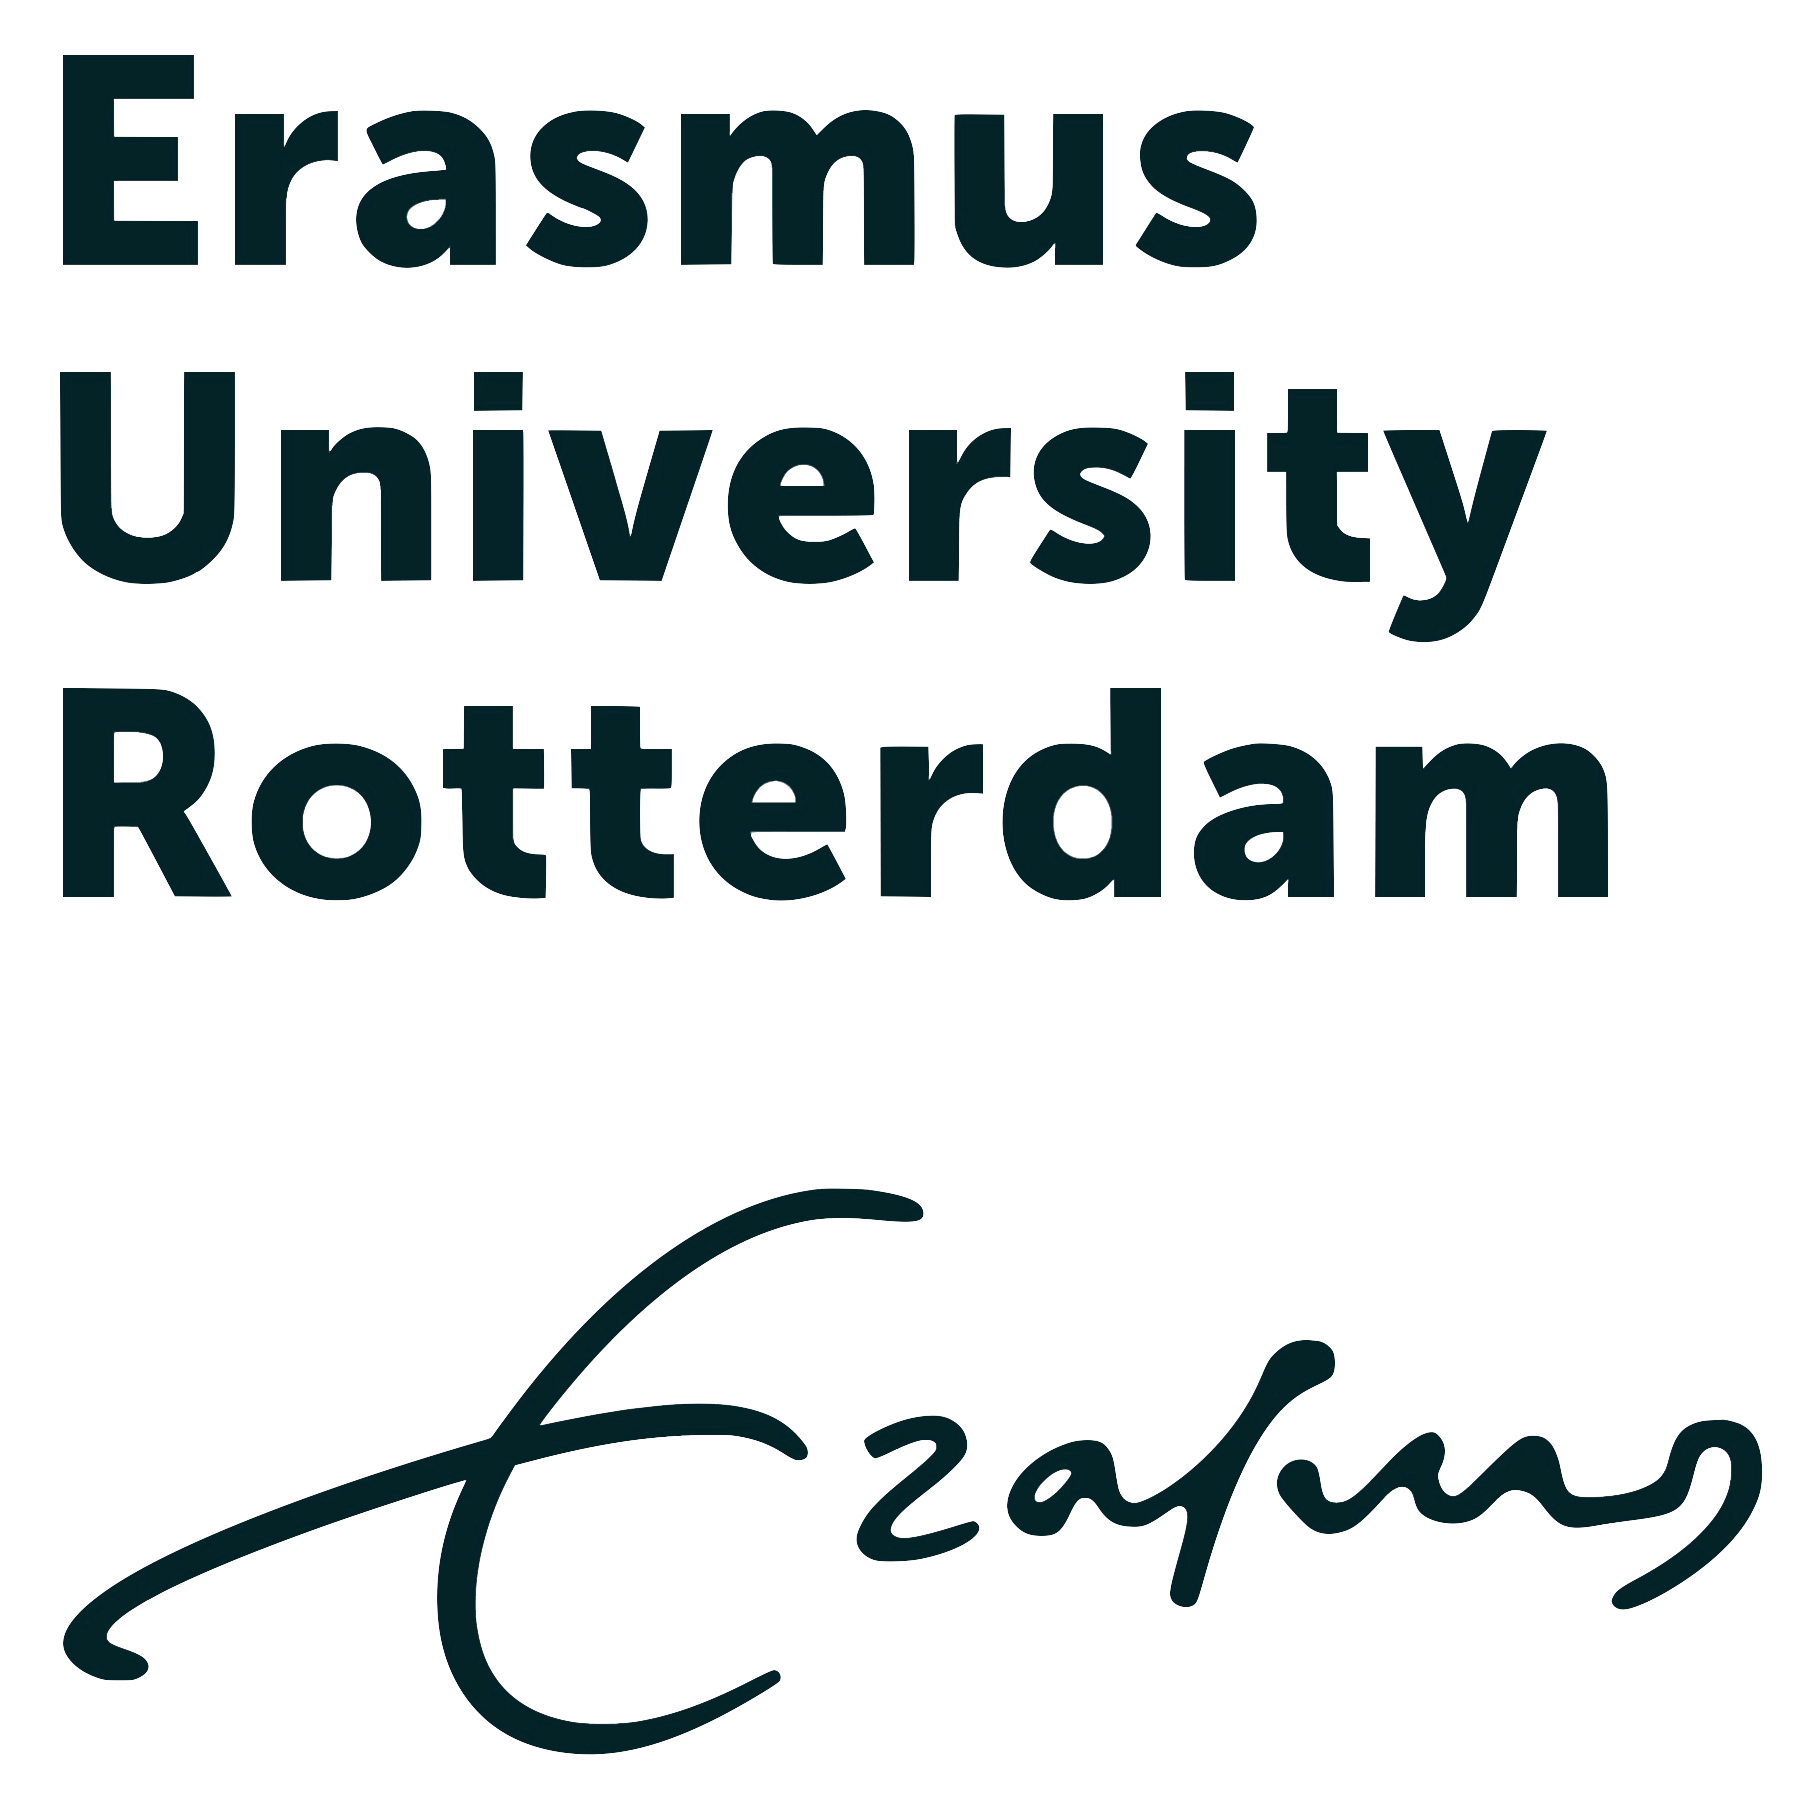 Rotterdam Logo - Erasmus University Rotterdam, Netherlands